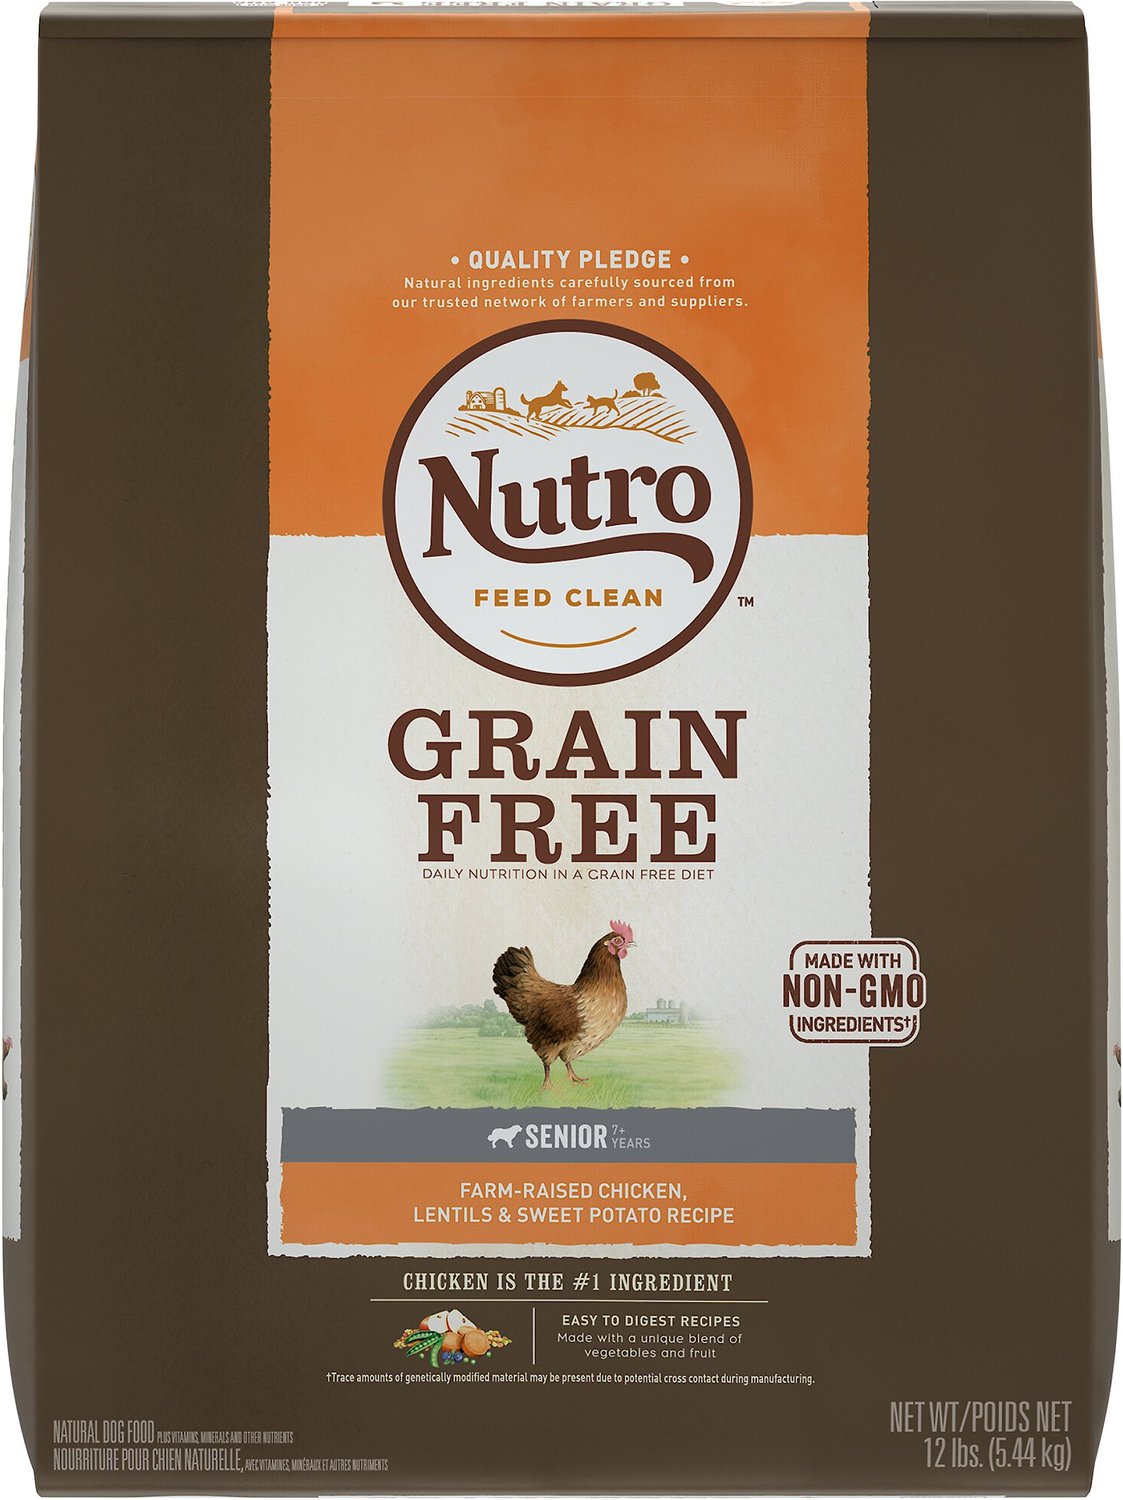 Nutro GrainFree Senior Farm Raised Chicken, Lentils